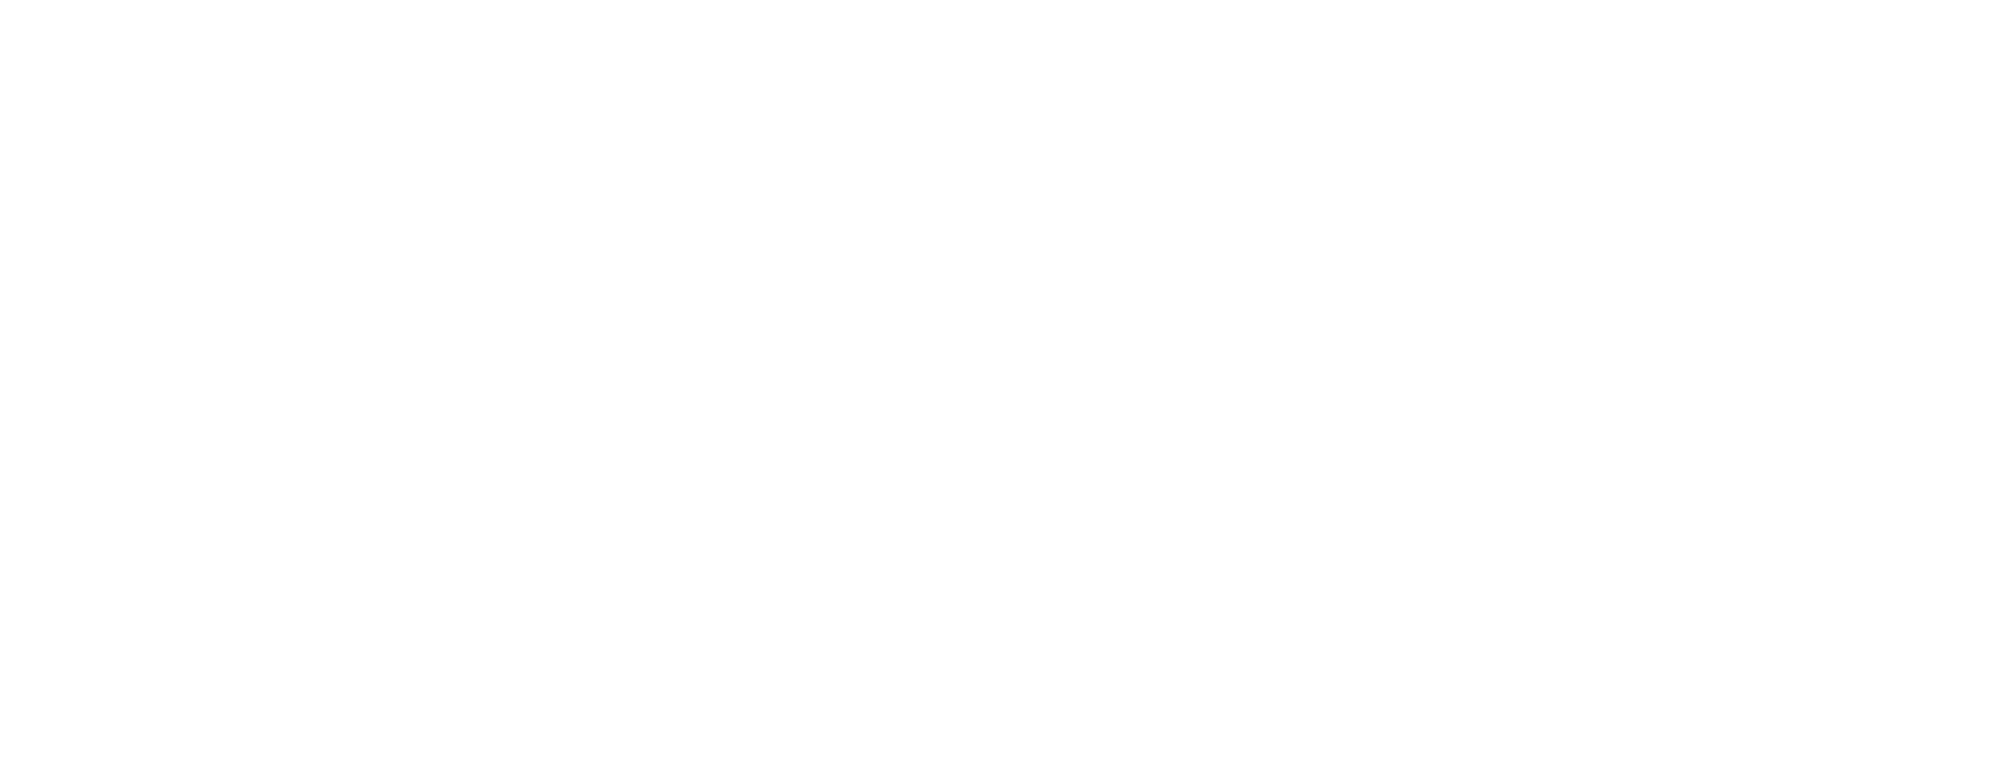 Movement Carolinas Movement Mortgage